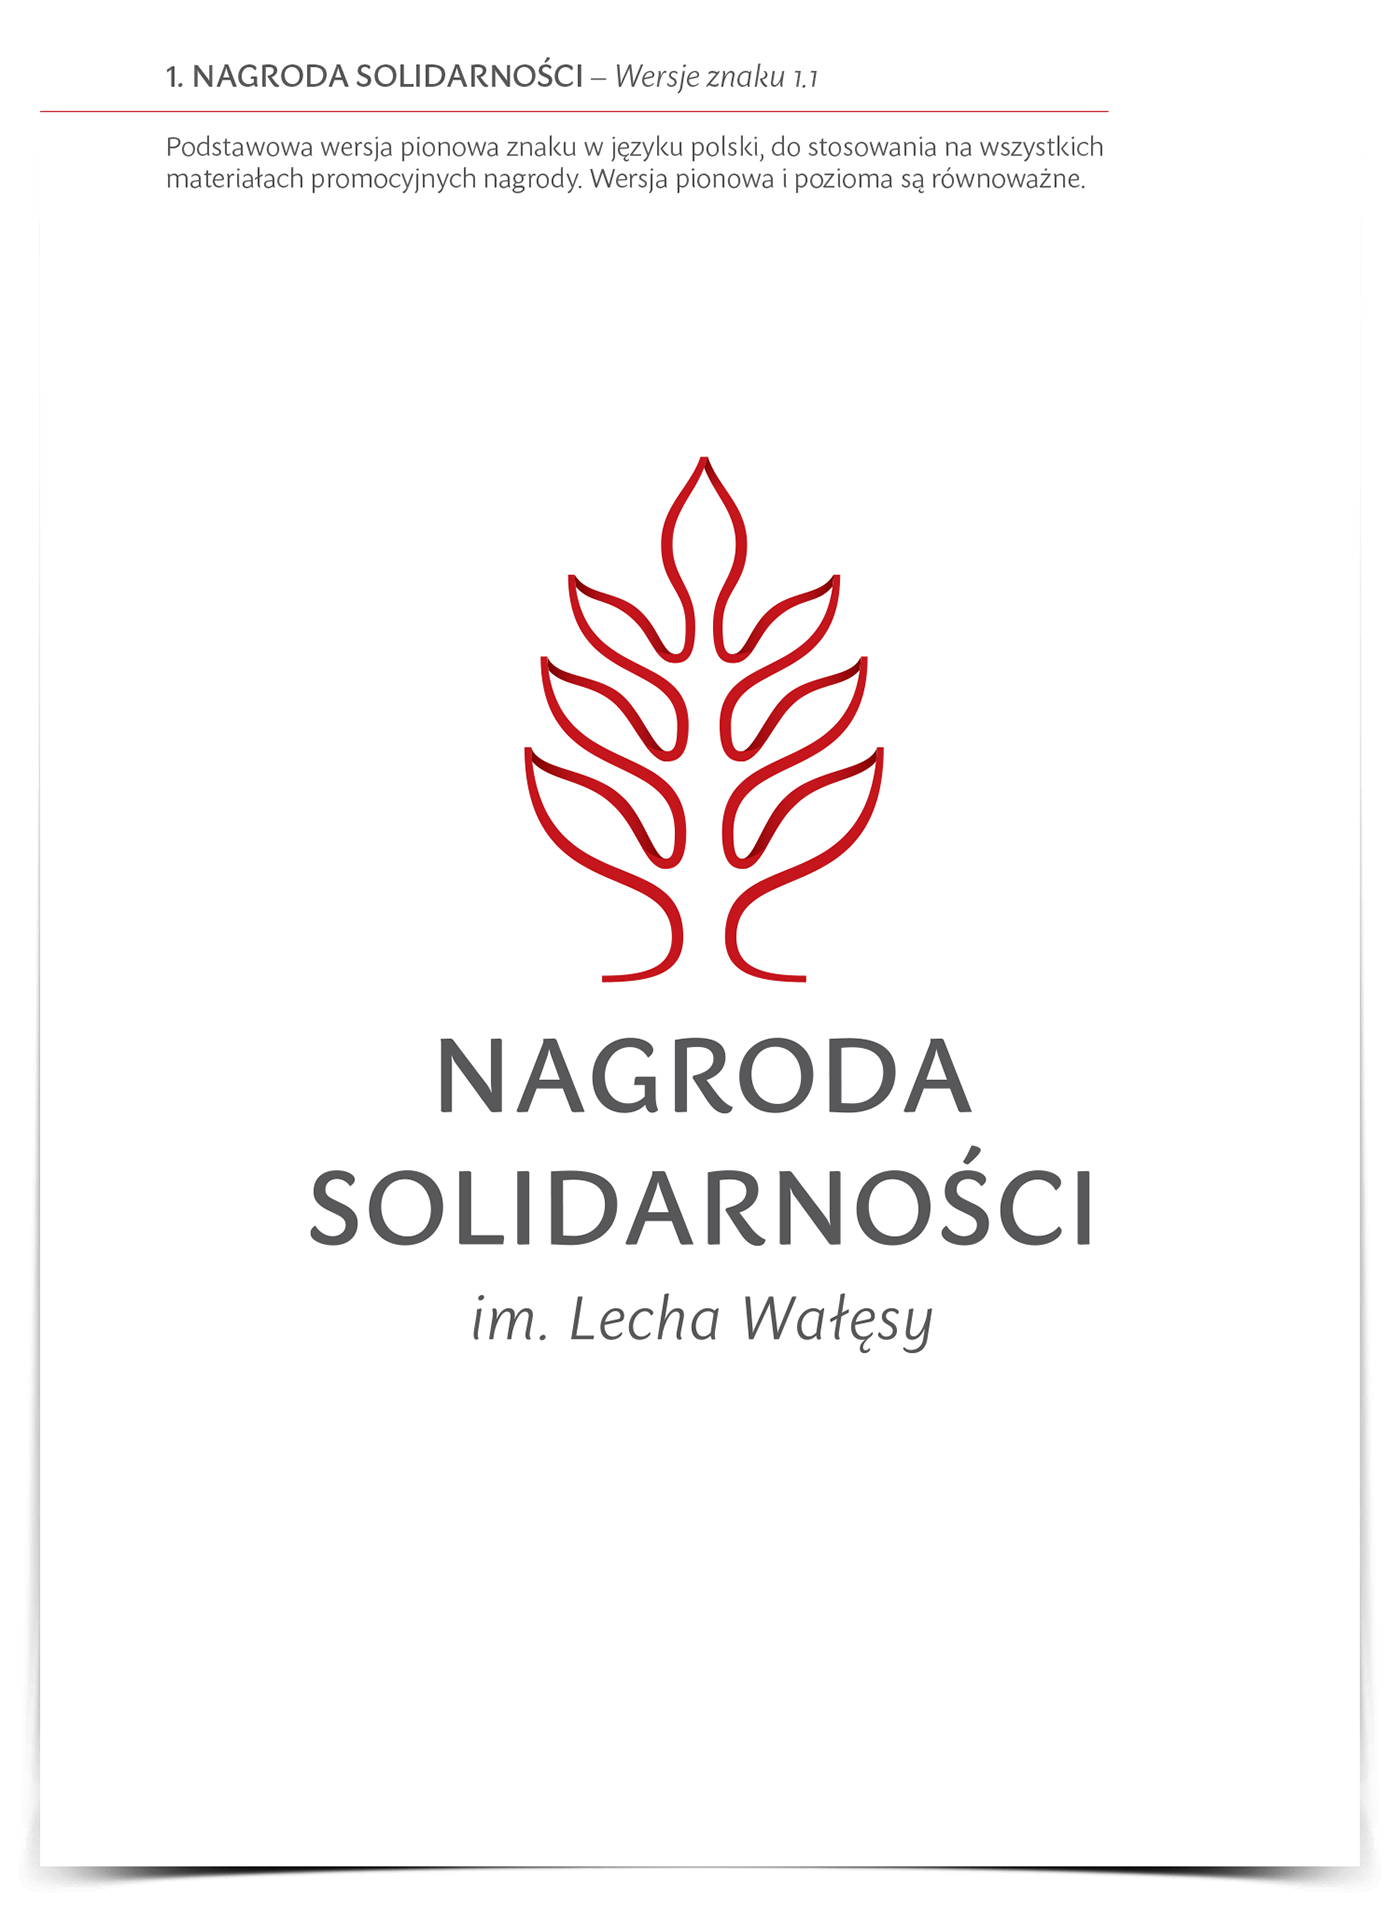 borutta SOLIDARITY PRIZE ID Mateusz Machalski  poland Solidarnosc logo walesa Lech Walesa